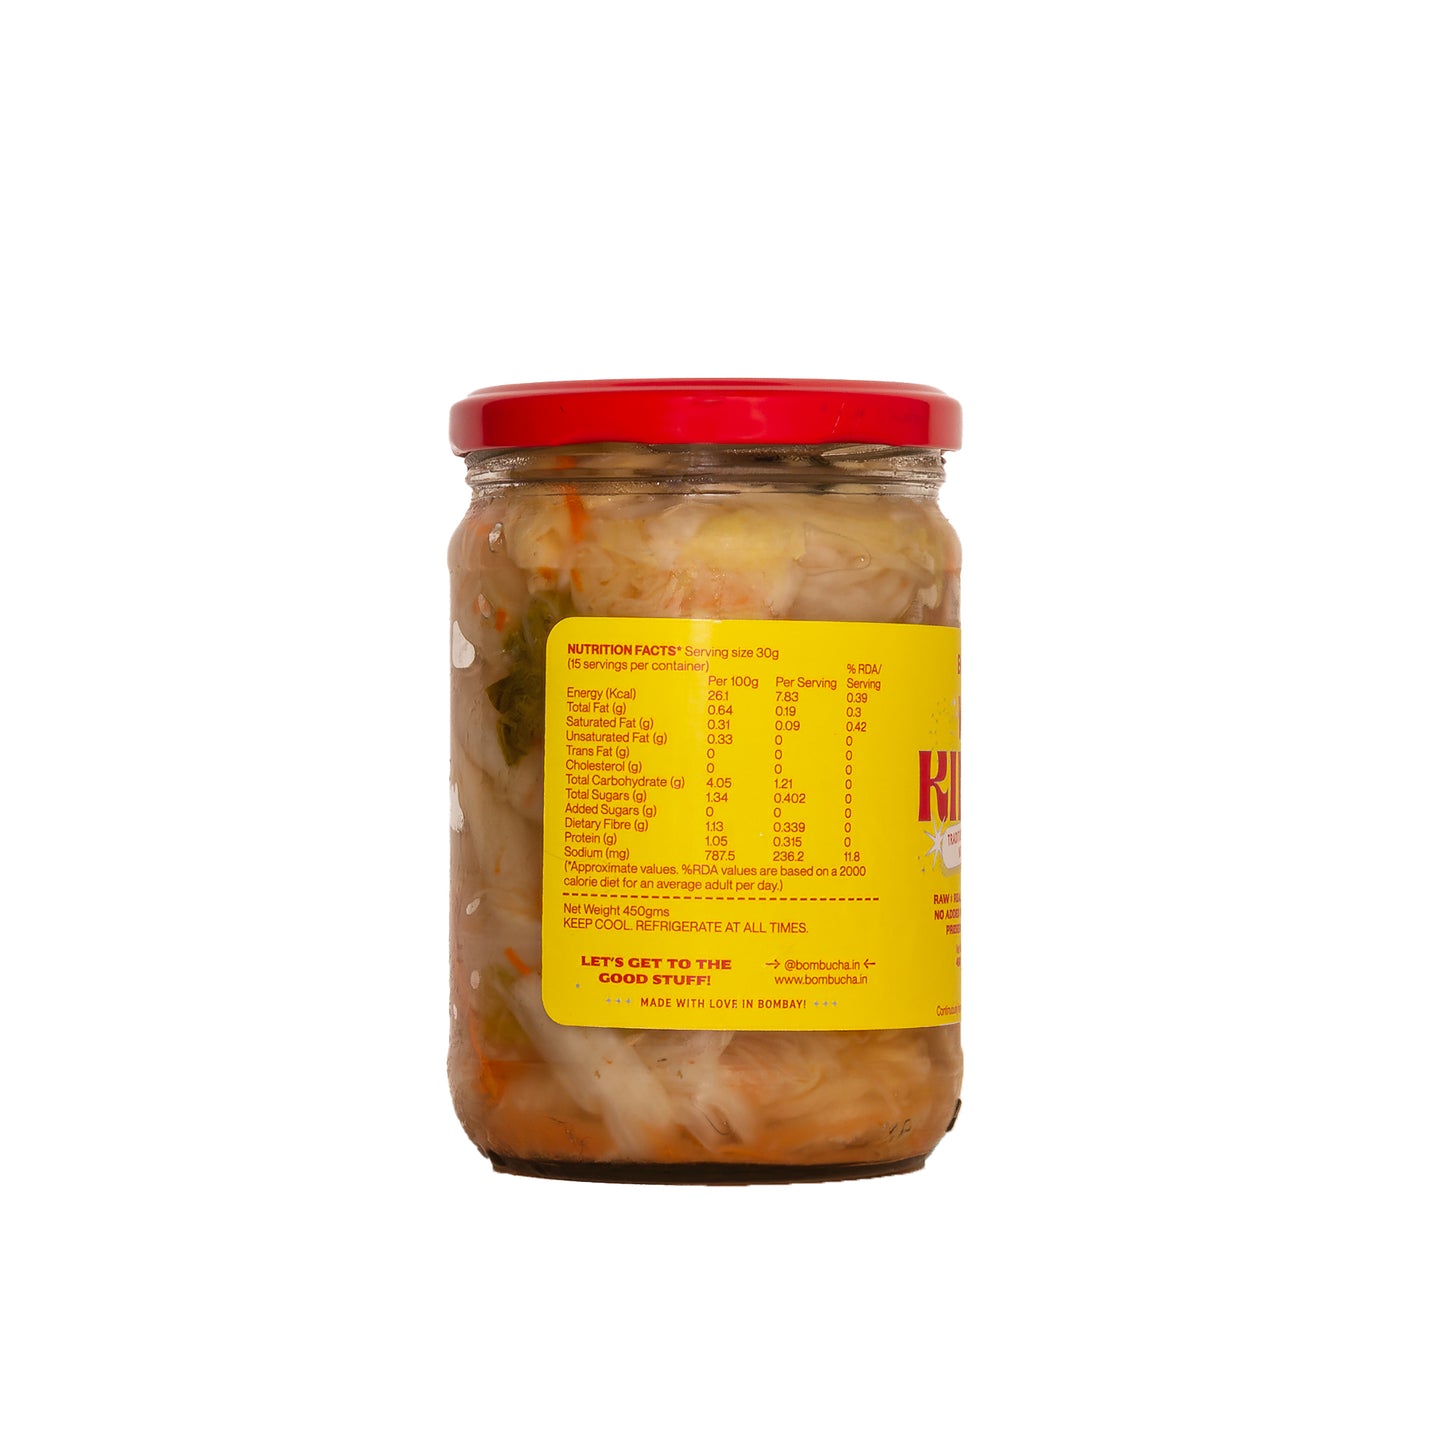 Kimchi - White (Non Spicy) 450gm (MUM)